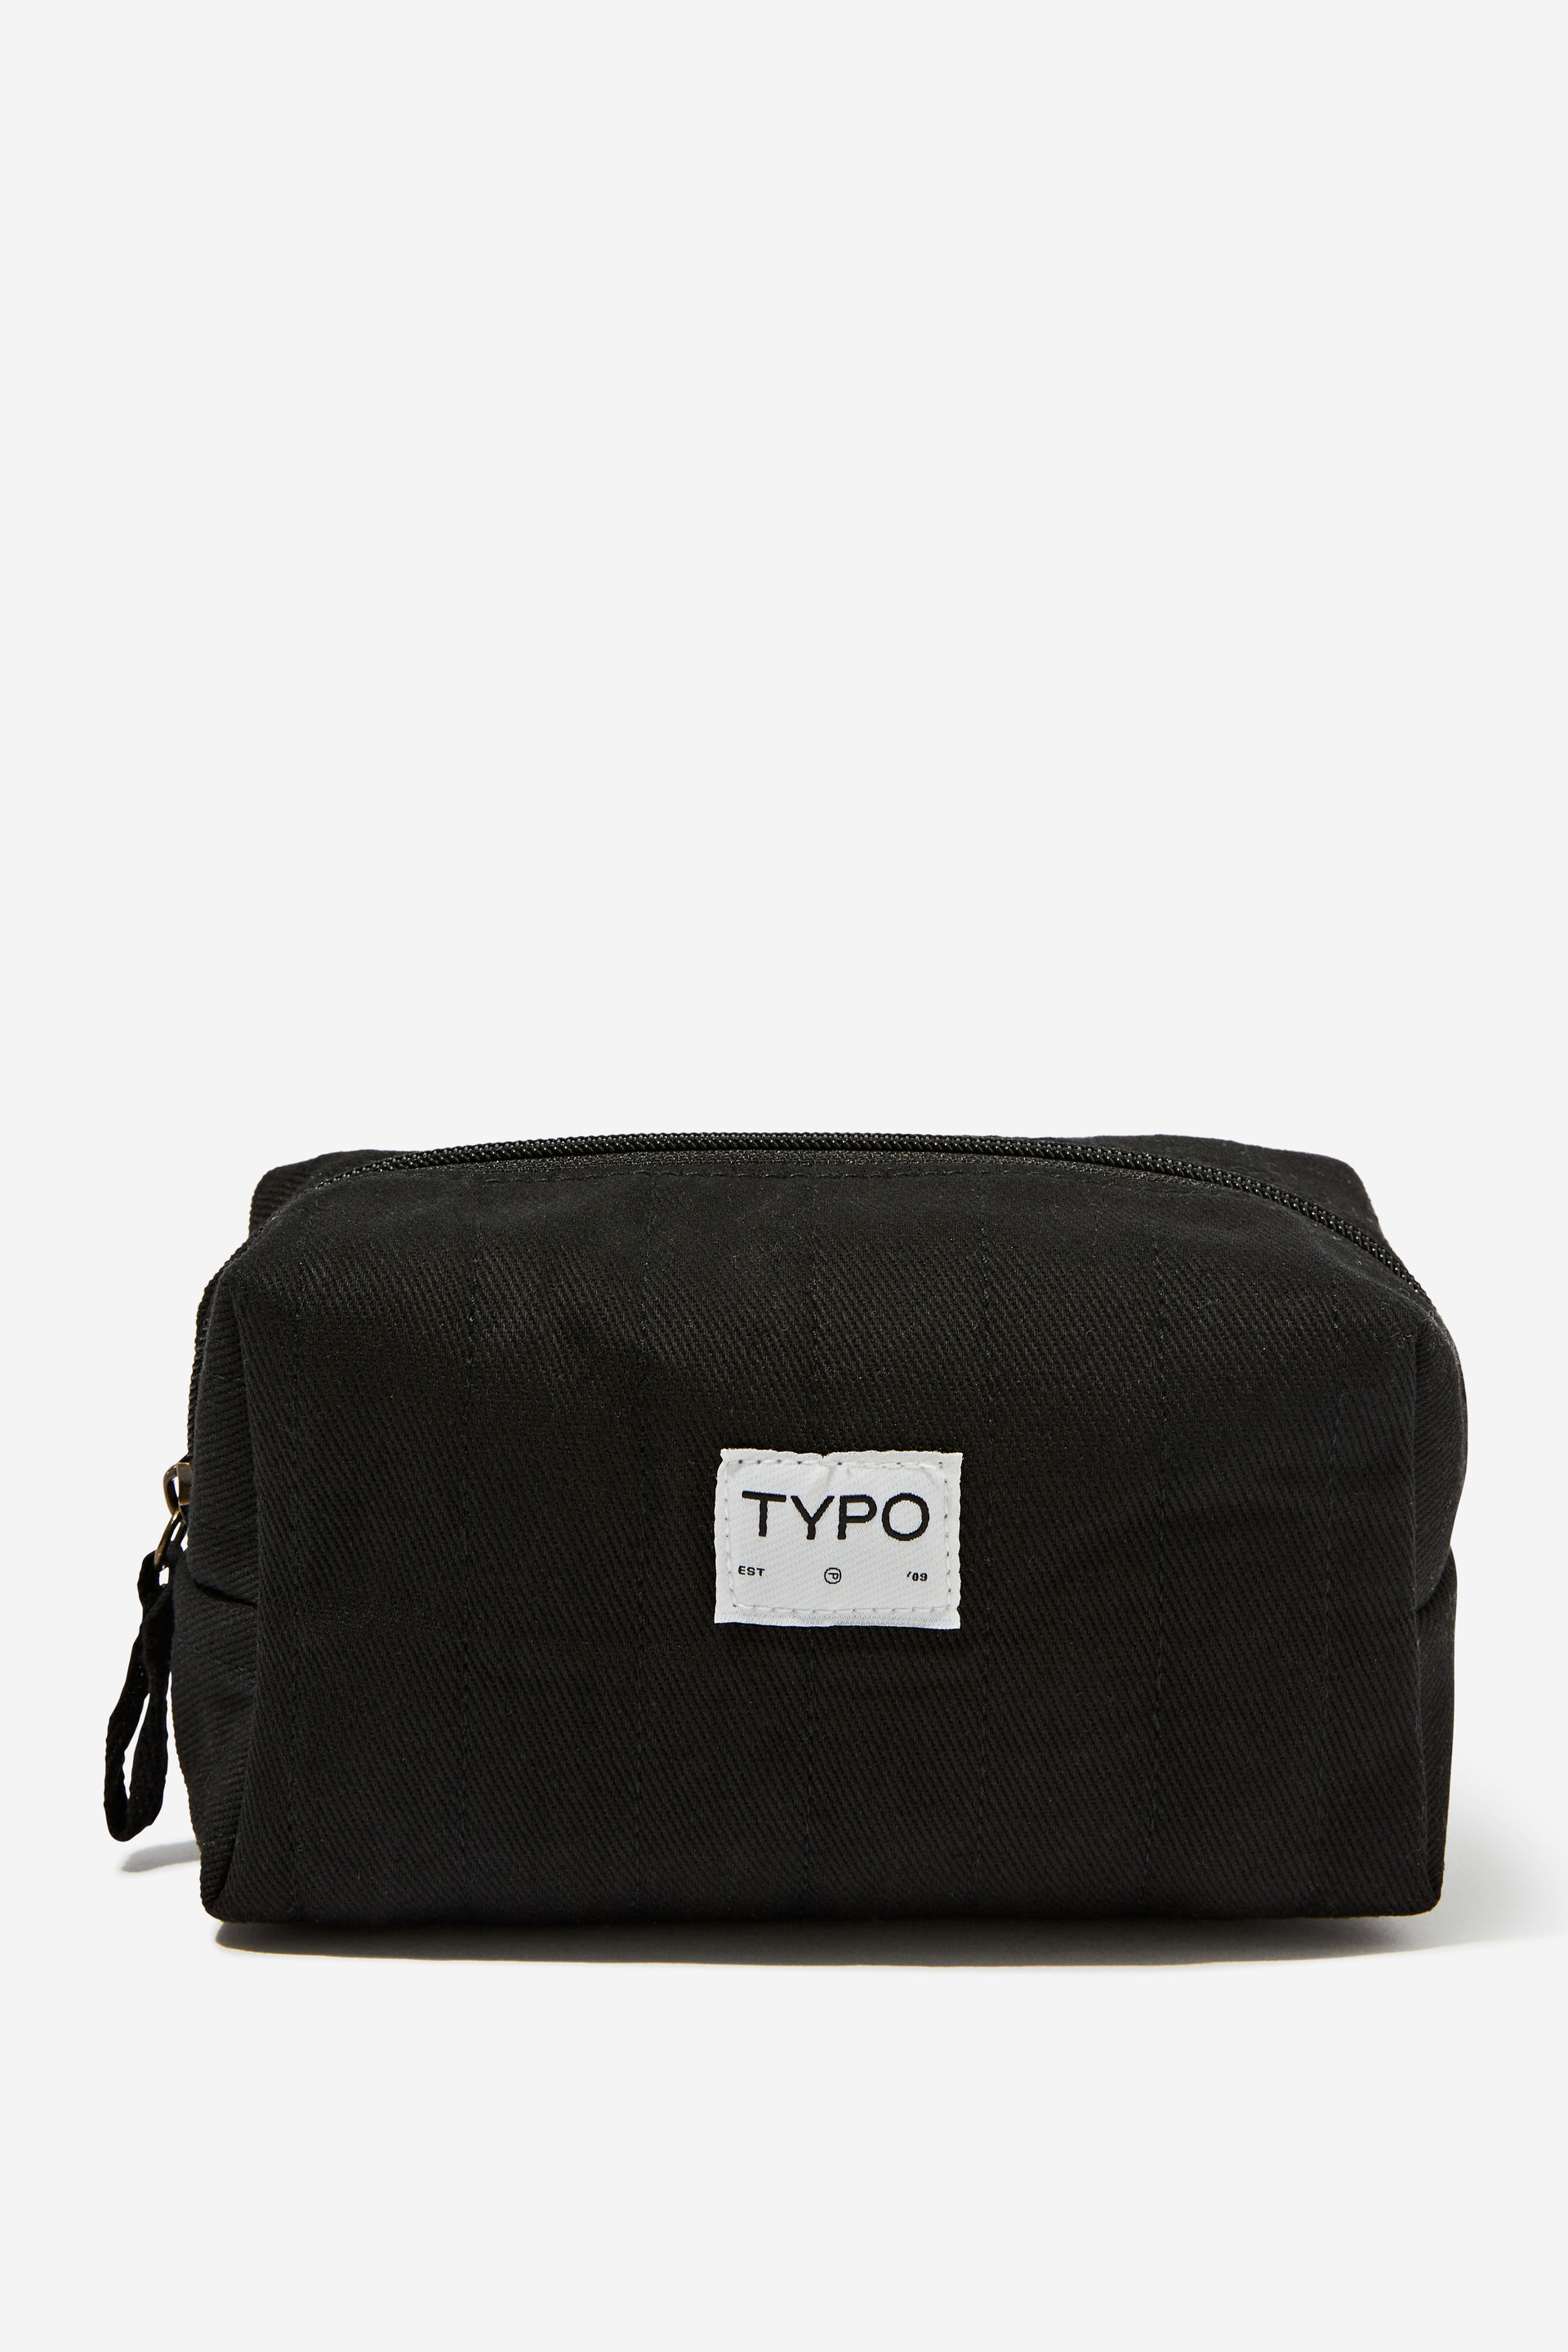 Typo - Florence Pencil Case - Black